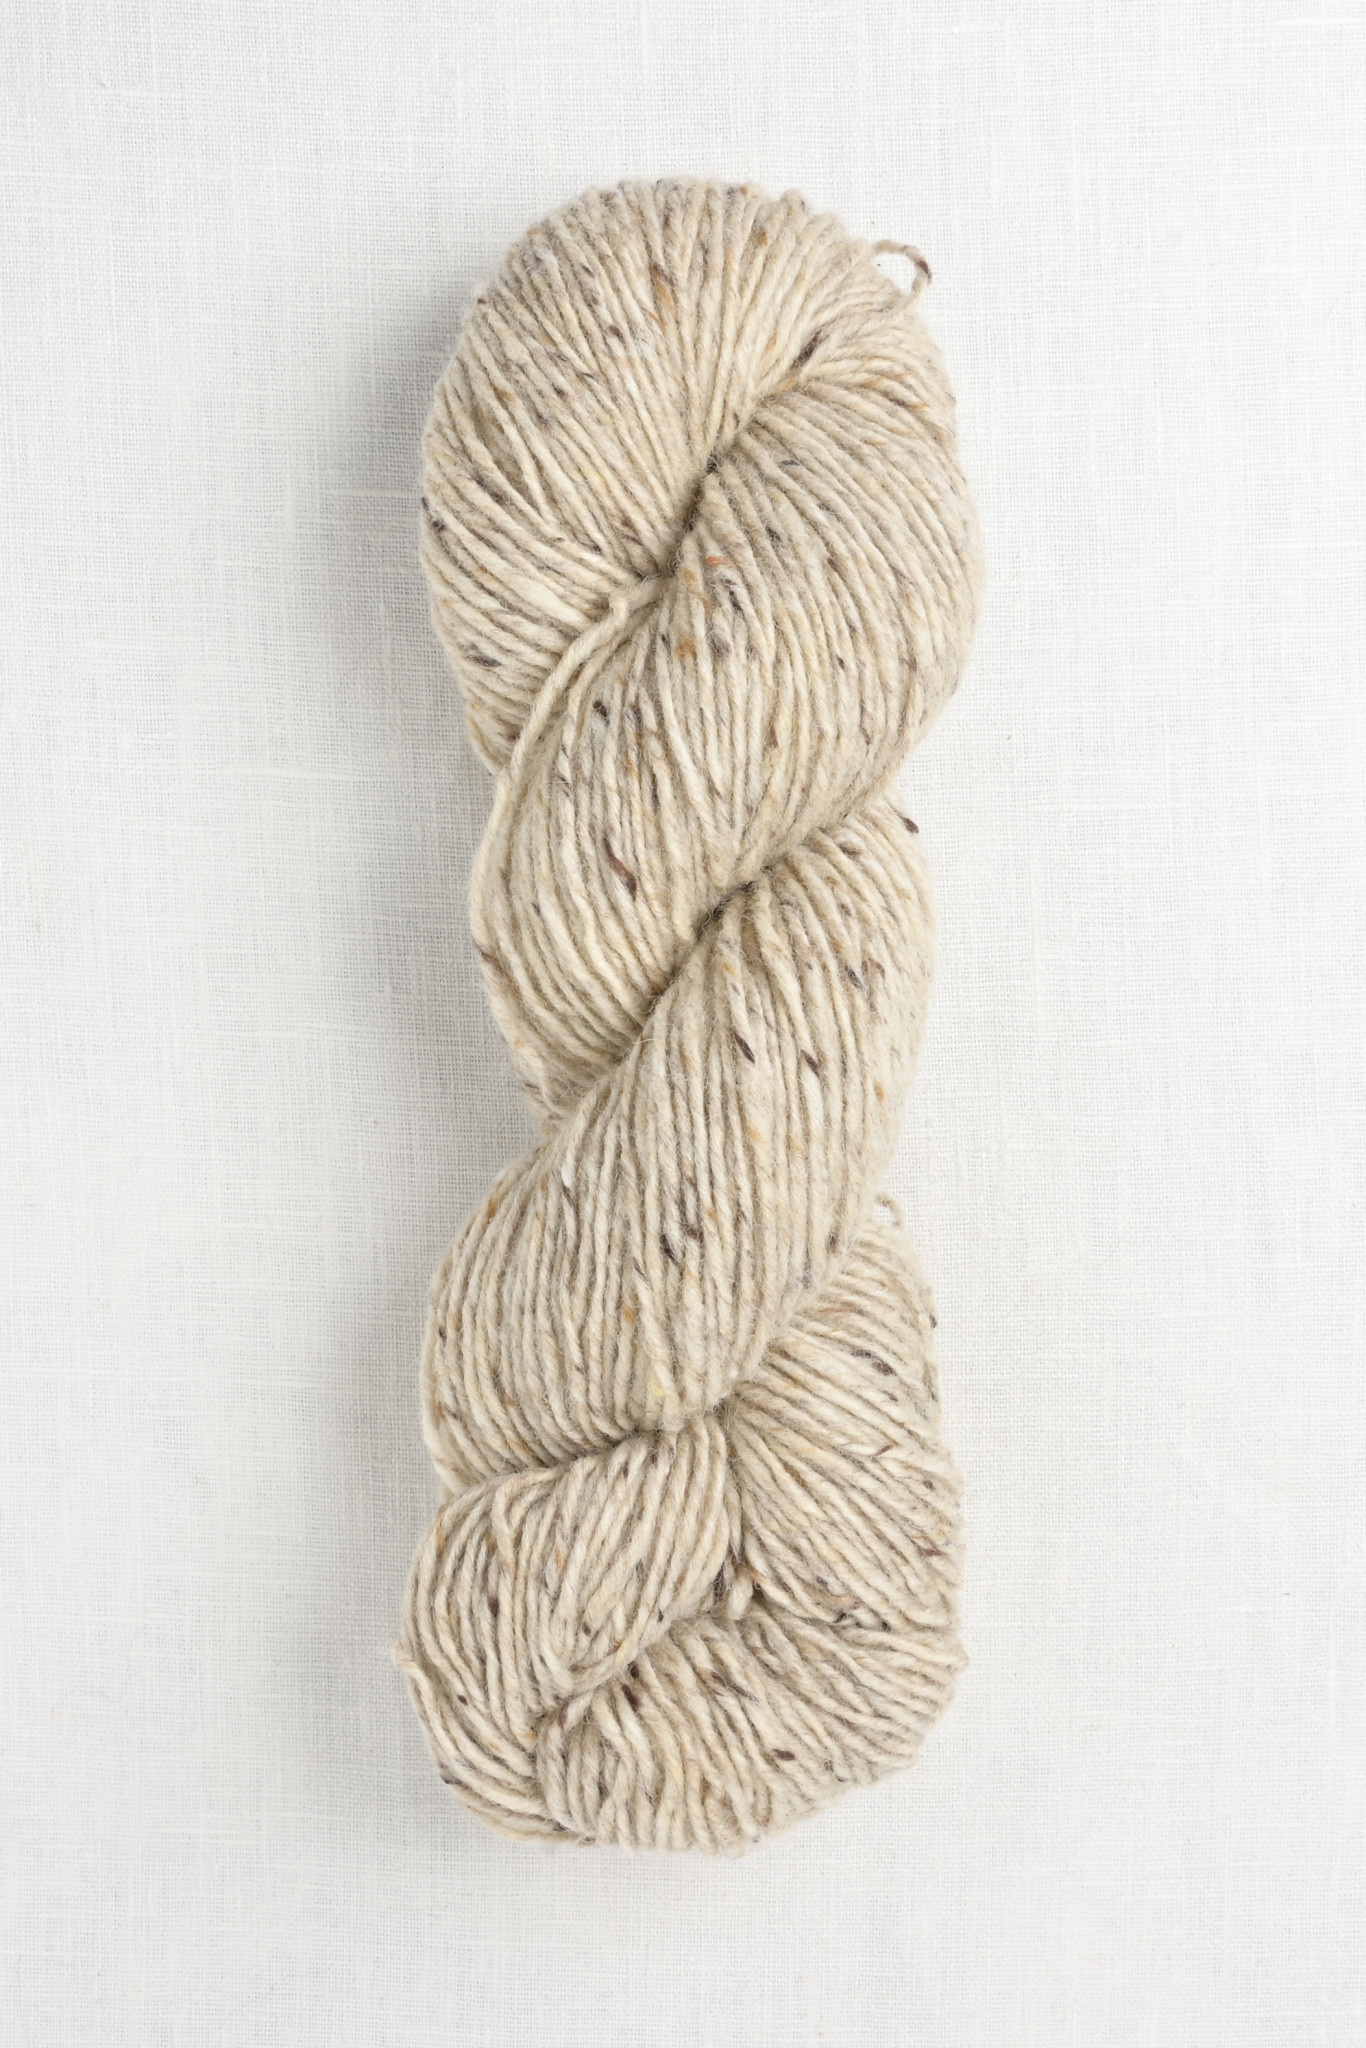 mølle paritet Ikke nok Isager Aran Tweed Sand - Wool and Company Fine Yarn